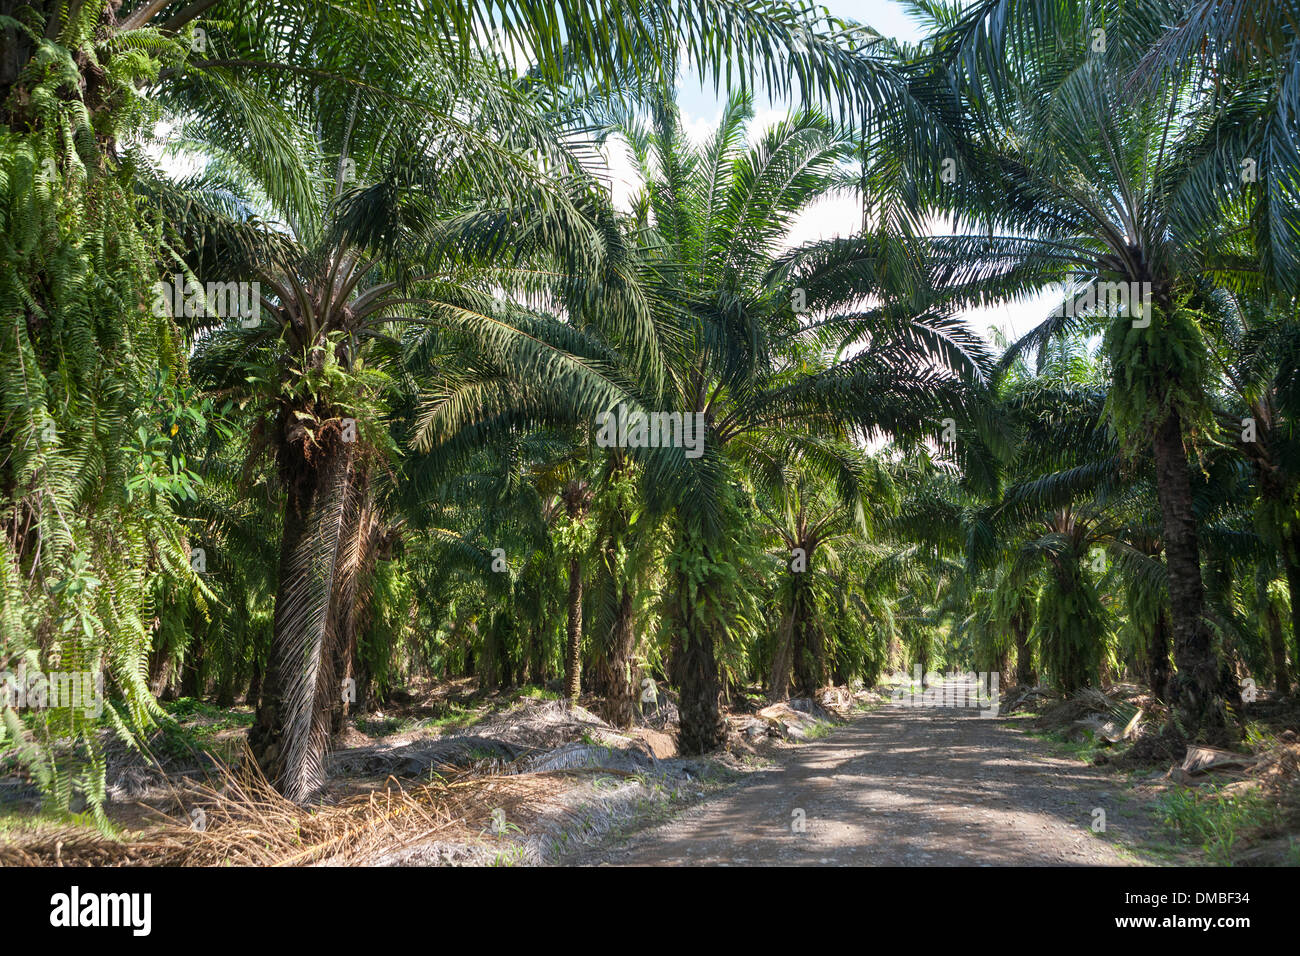 Palm africana di piantagioni in Costa Rica. Nativo di West Africa, Elacis guineensis è stato piantato negli anni quaranta da United Fruit Co. Foto Stock